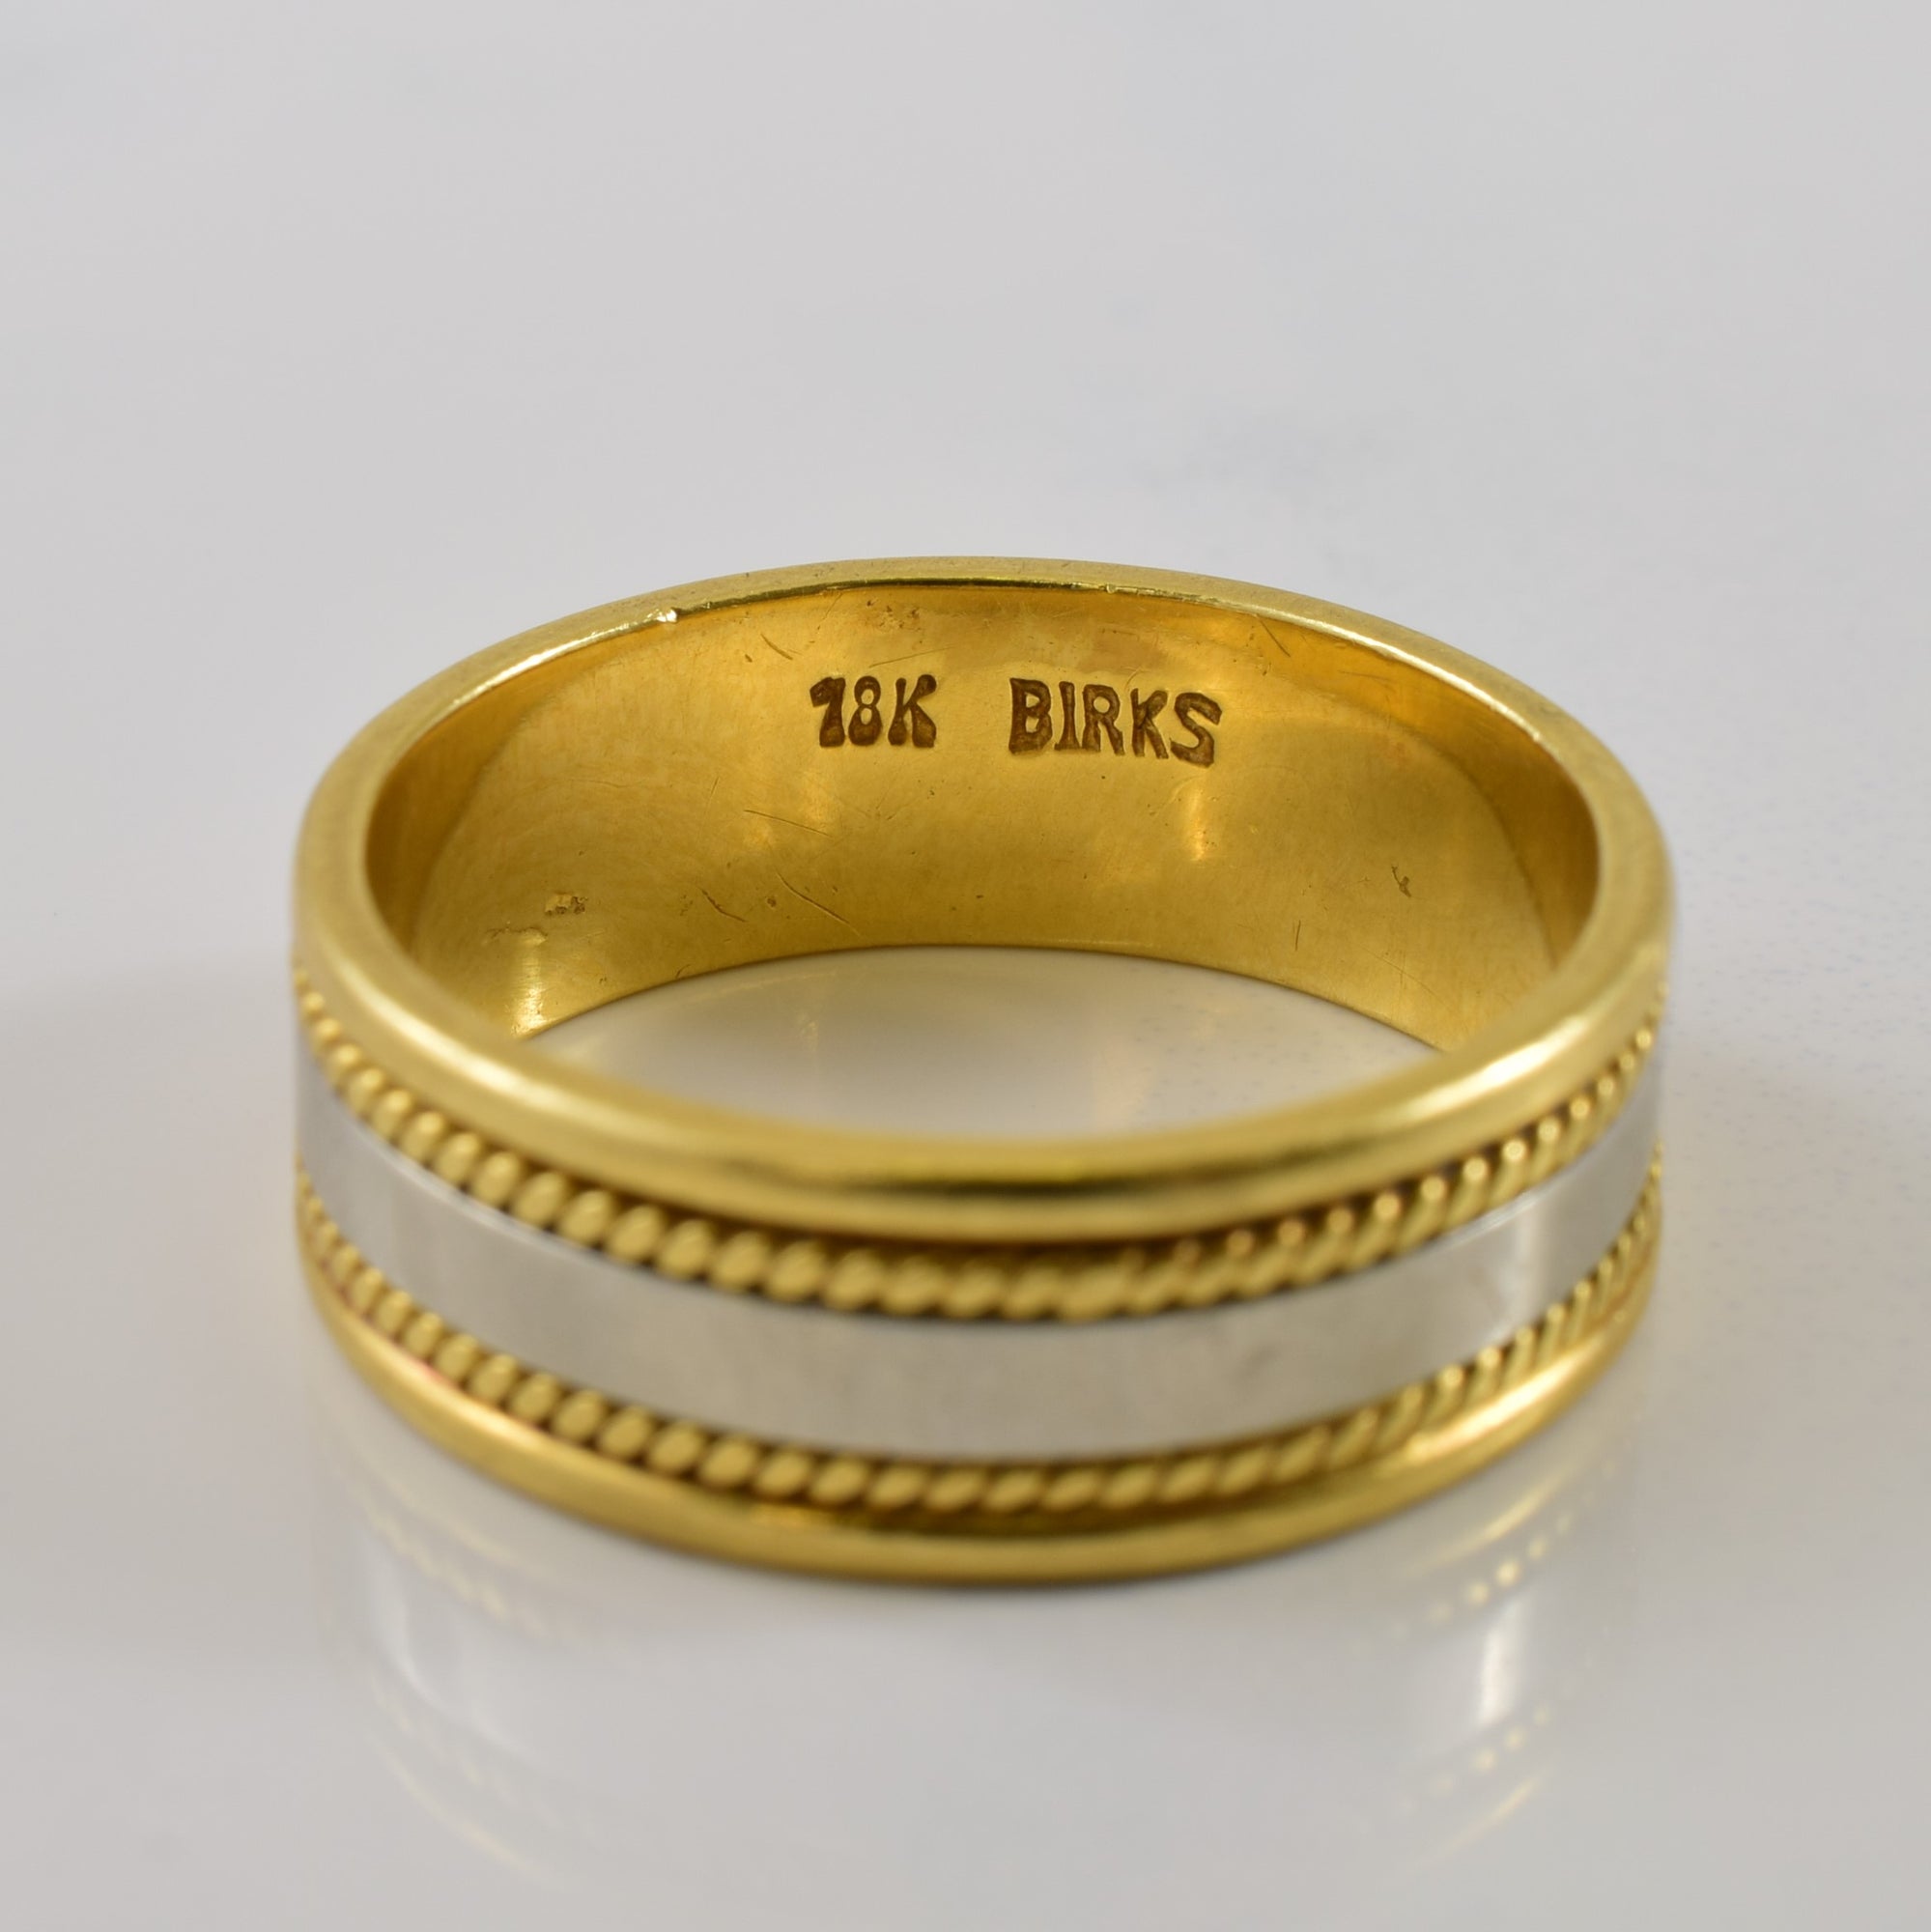 Birks' 18k Two Tone Ring | SZ 9.5 |